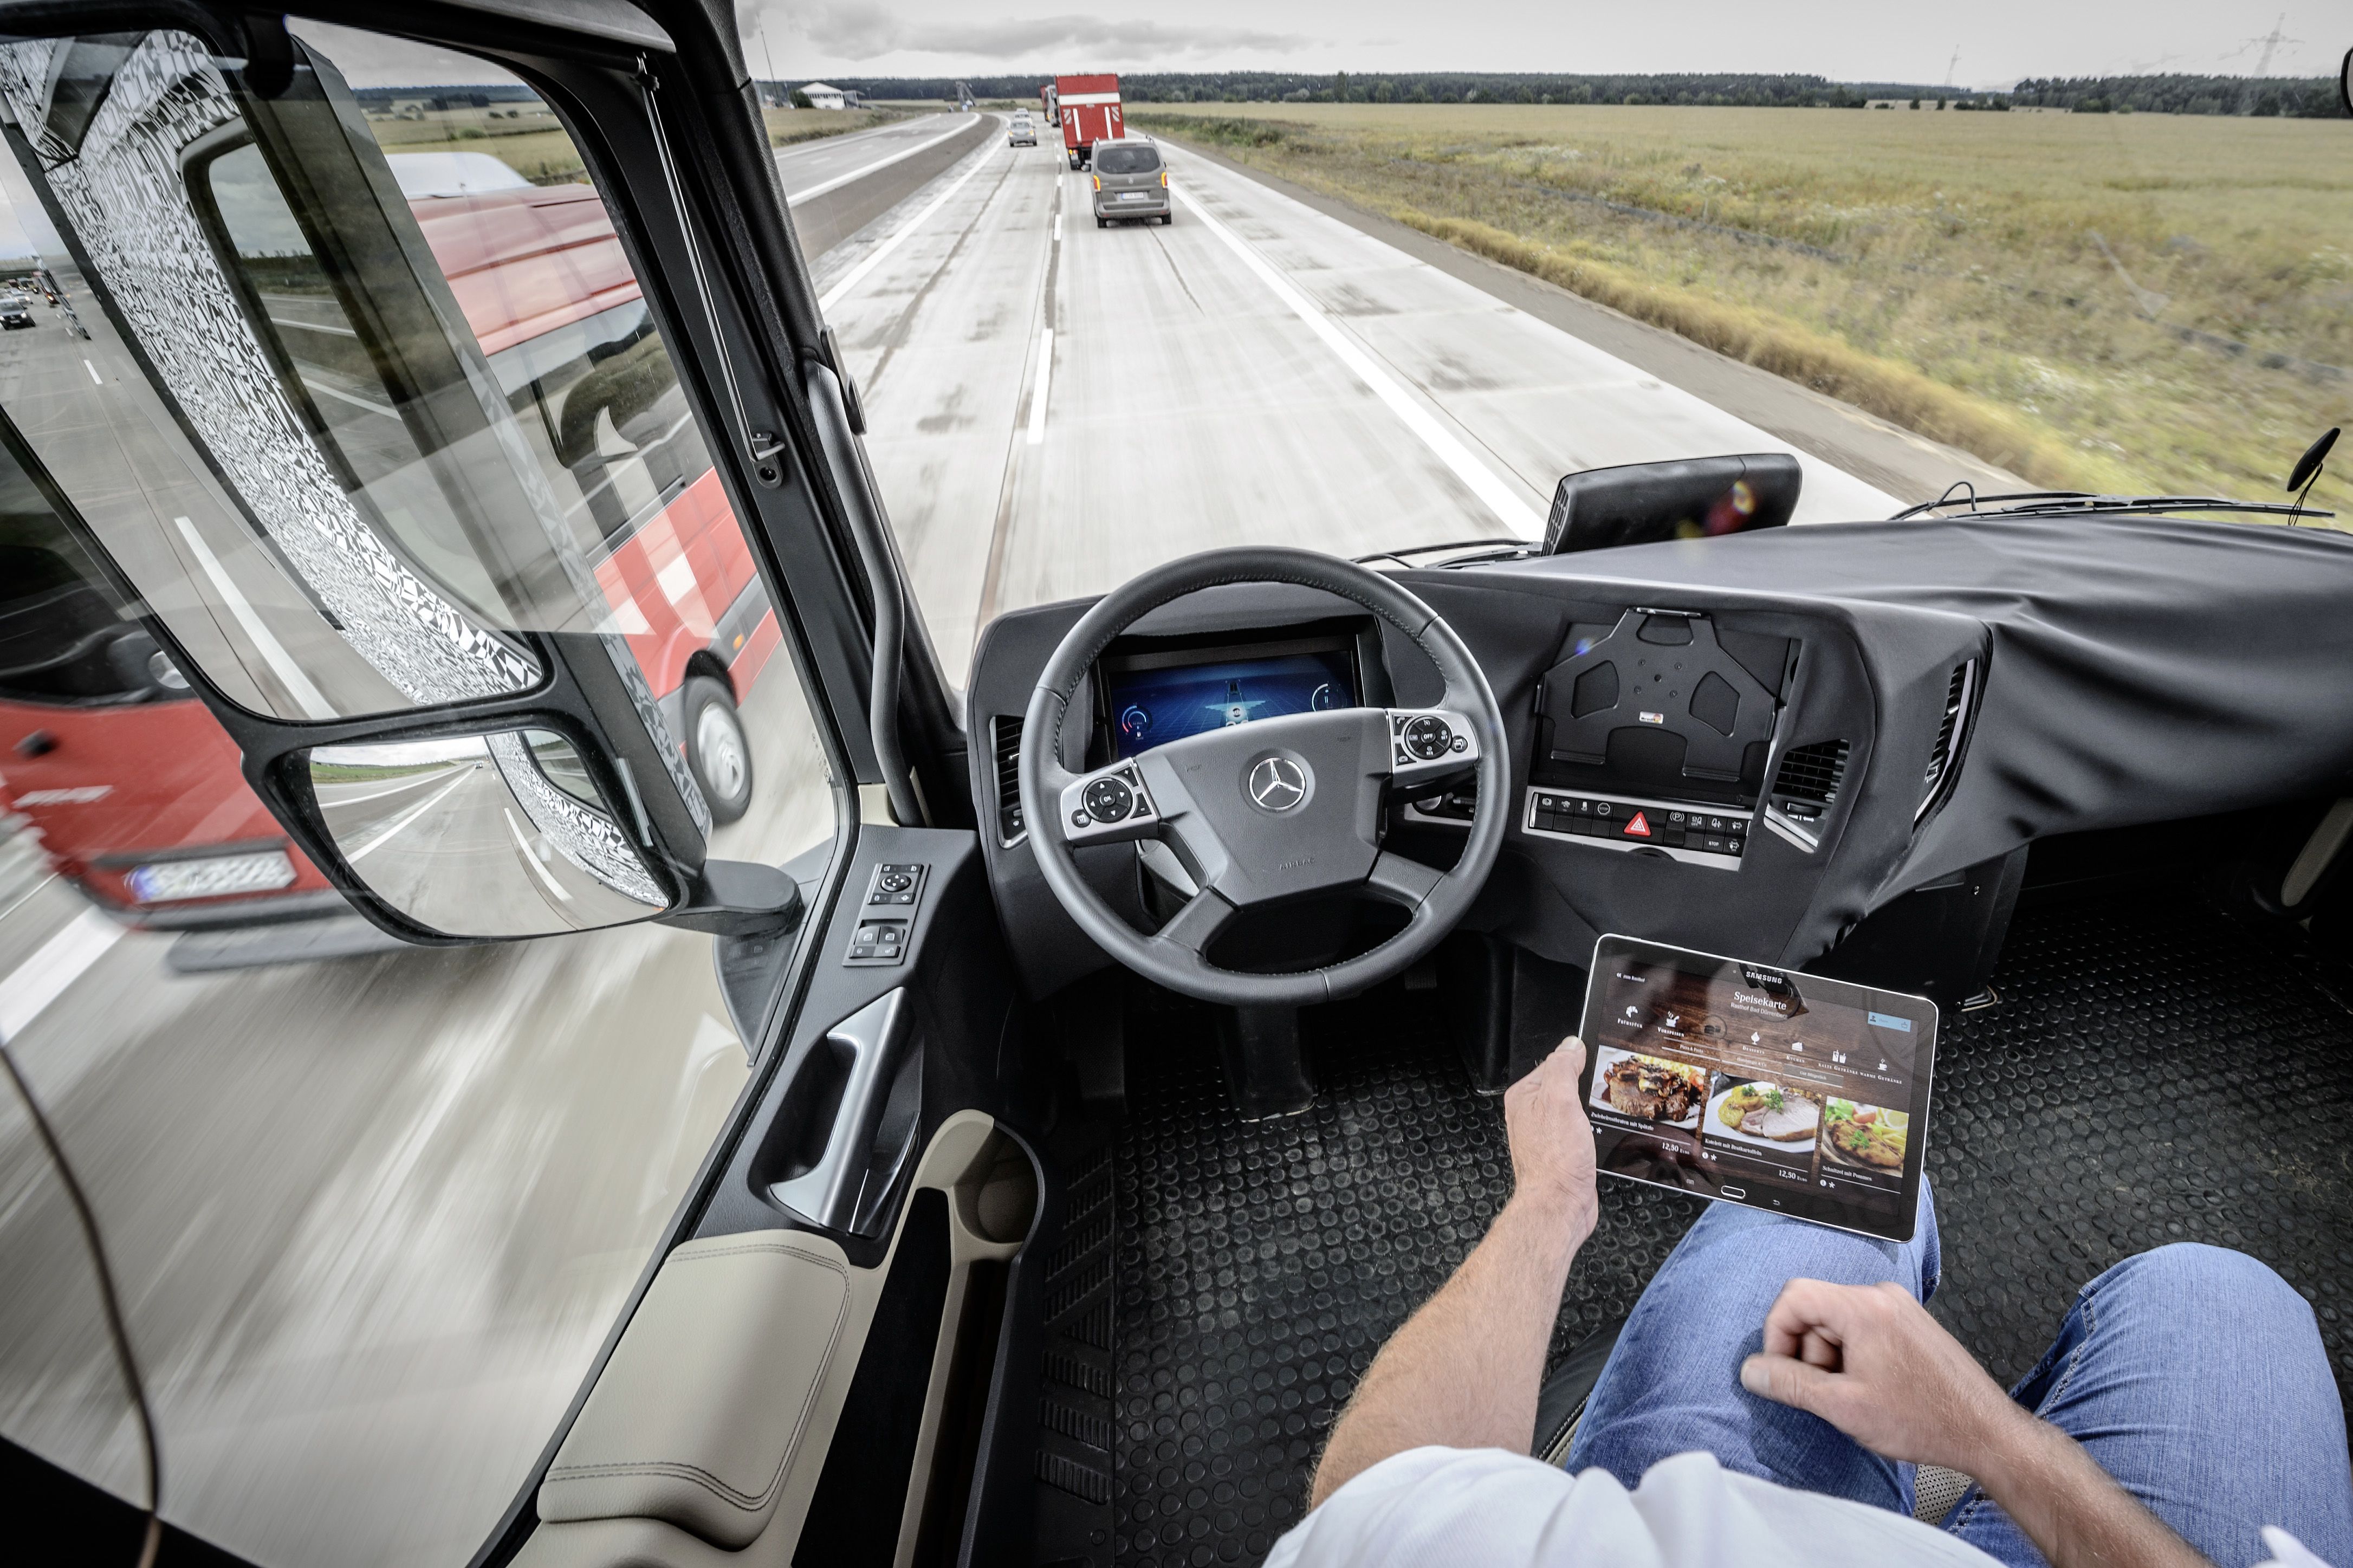 Image result for self-driving trucks